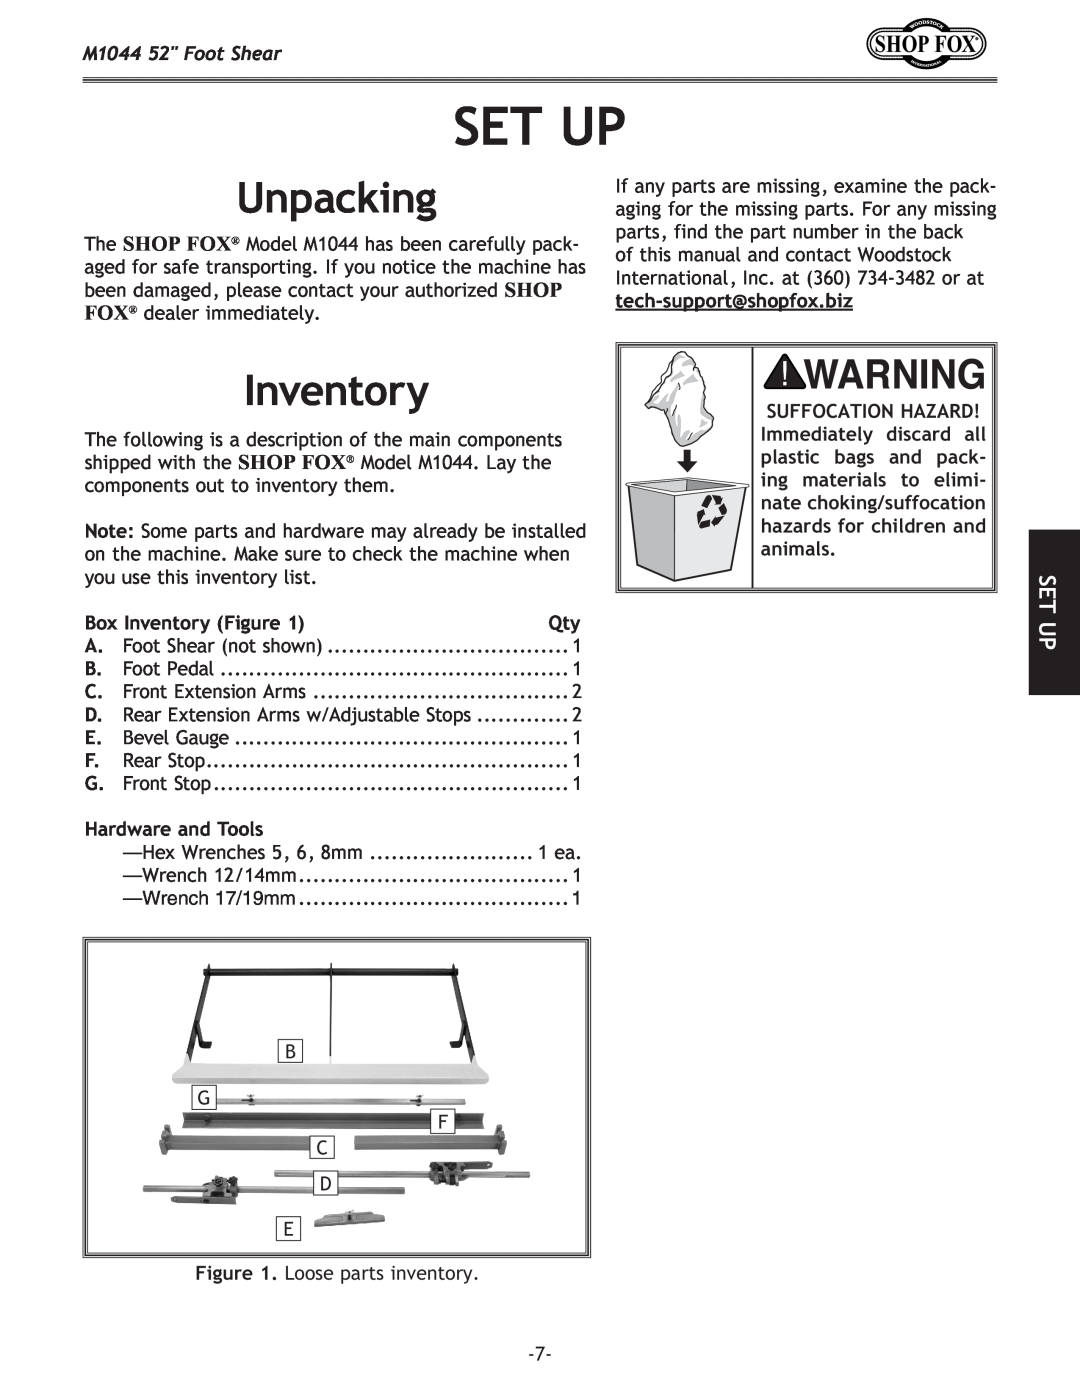 Woodstock manual Set Up, Unpacking, Box Inventory Figure, Hardware and Tools, M1044 52 Foot Shear 